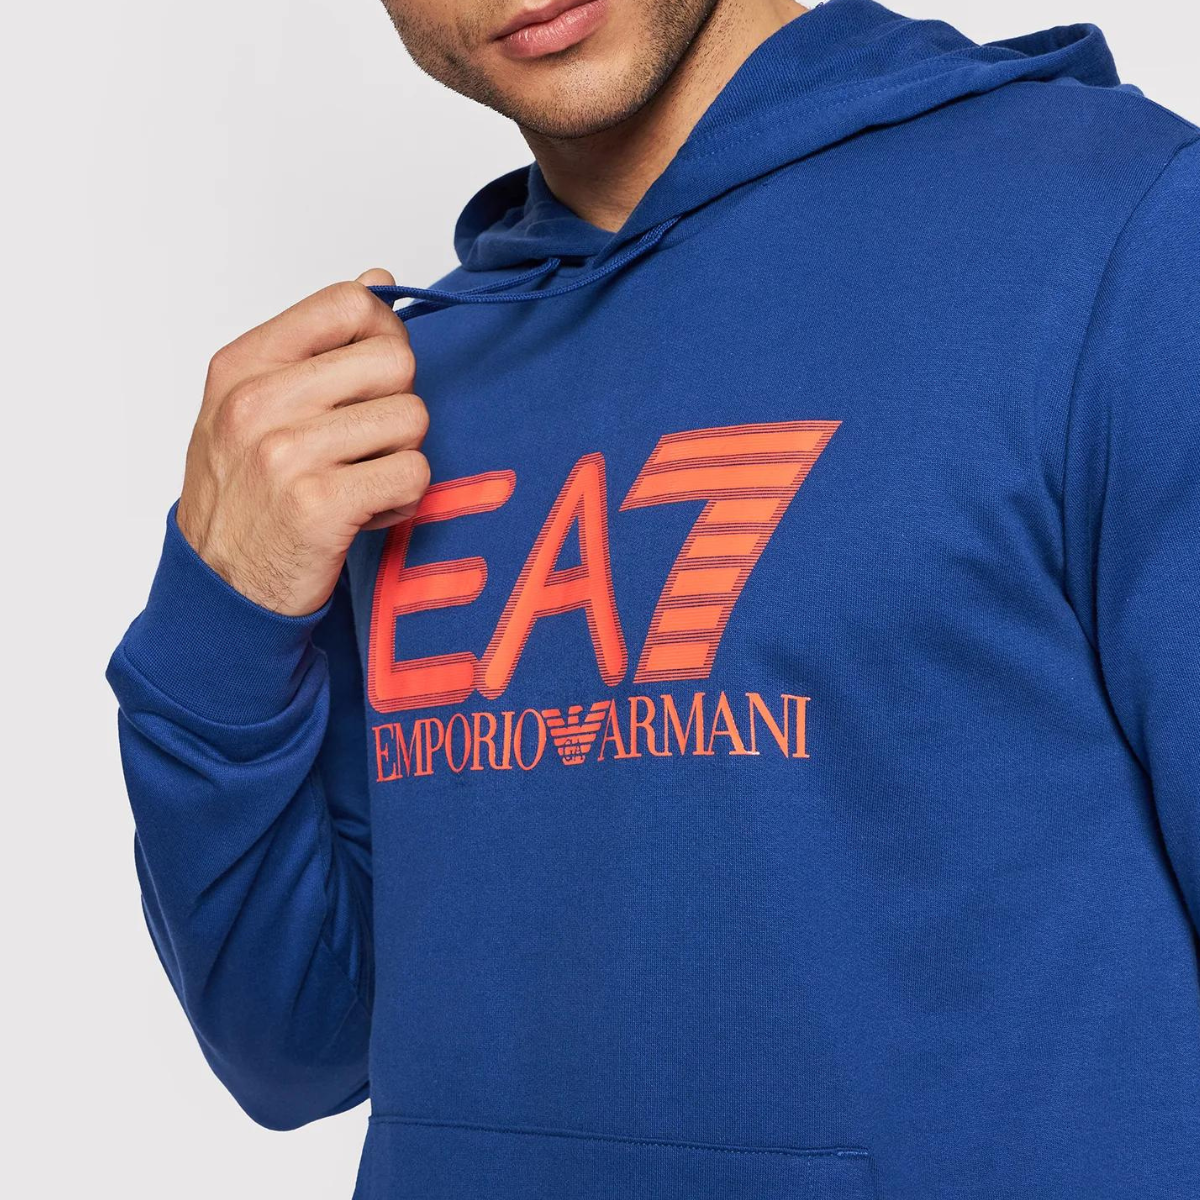 EA7 Giorgio Armani - Man Jersey Sweatshirt - Amparo Blue